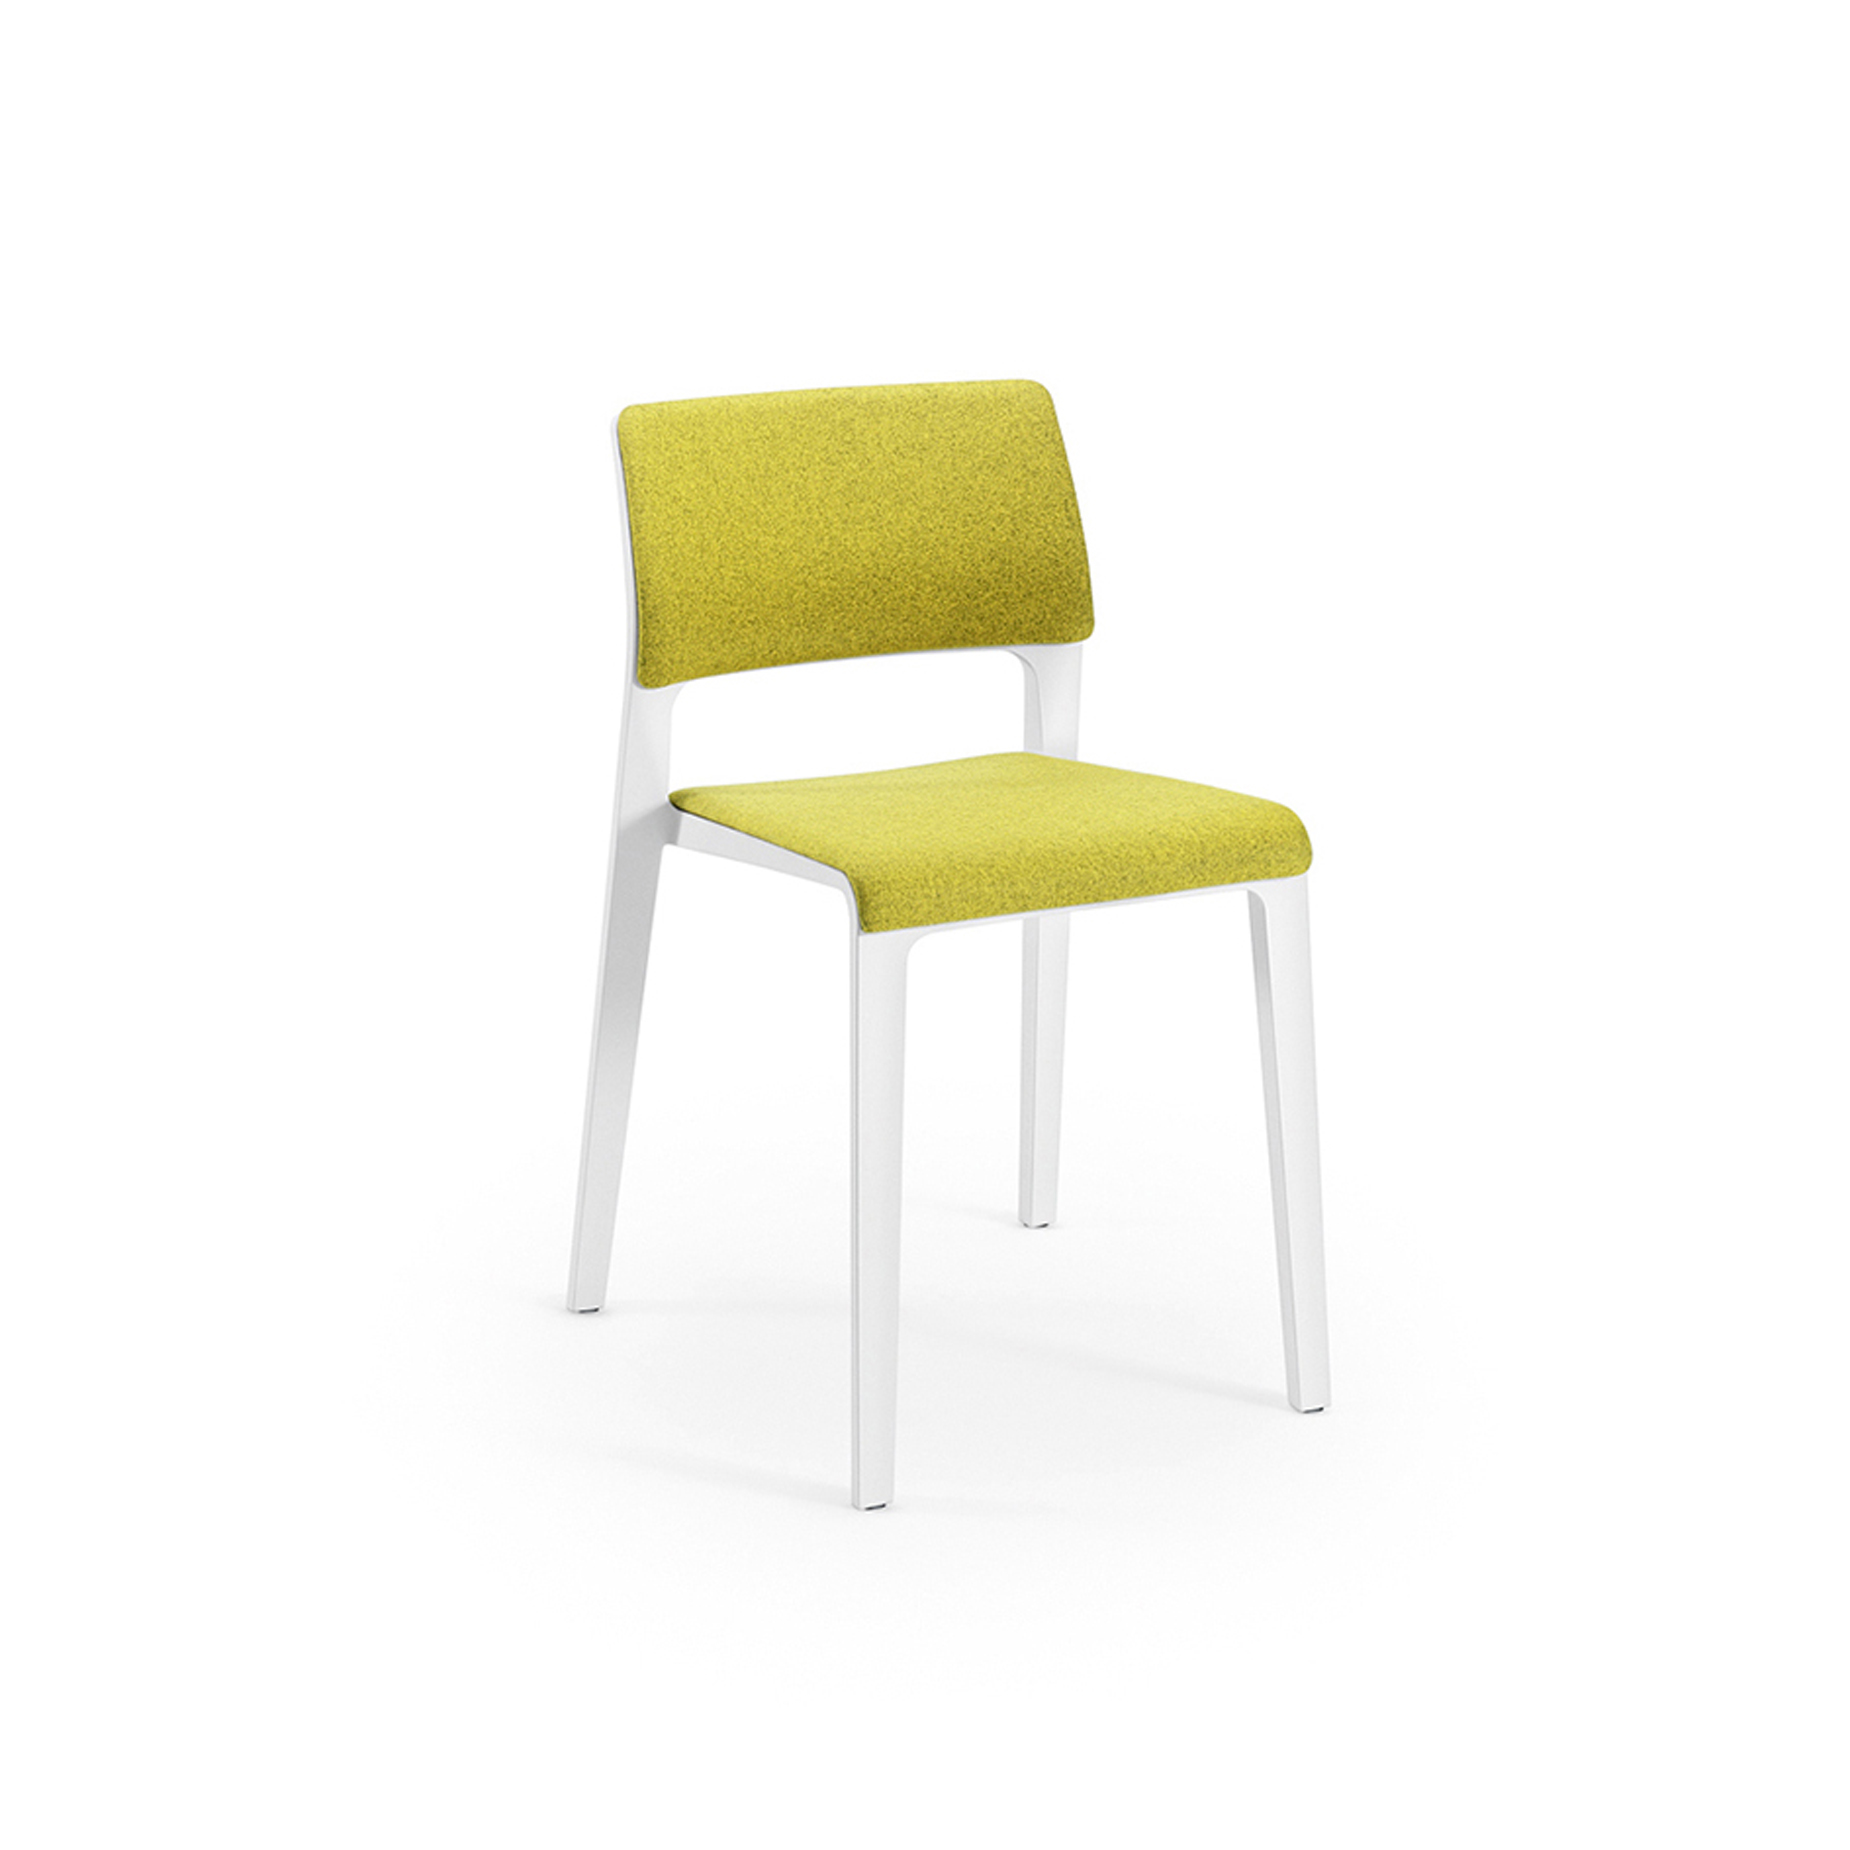 Sillas Juno | MINIM – mobiliario e iluminación de diseño contemporáneo